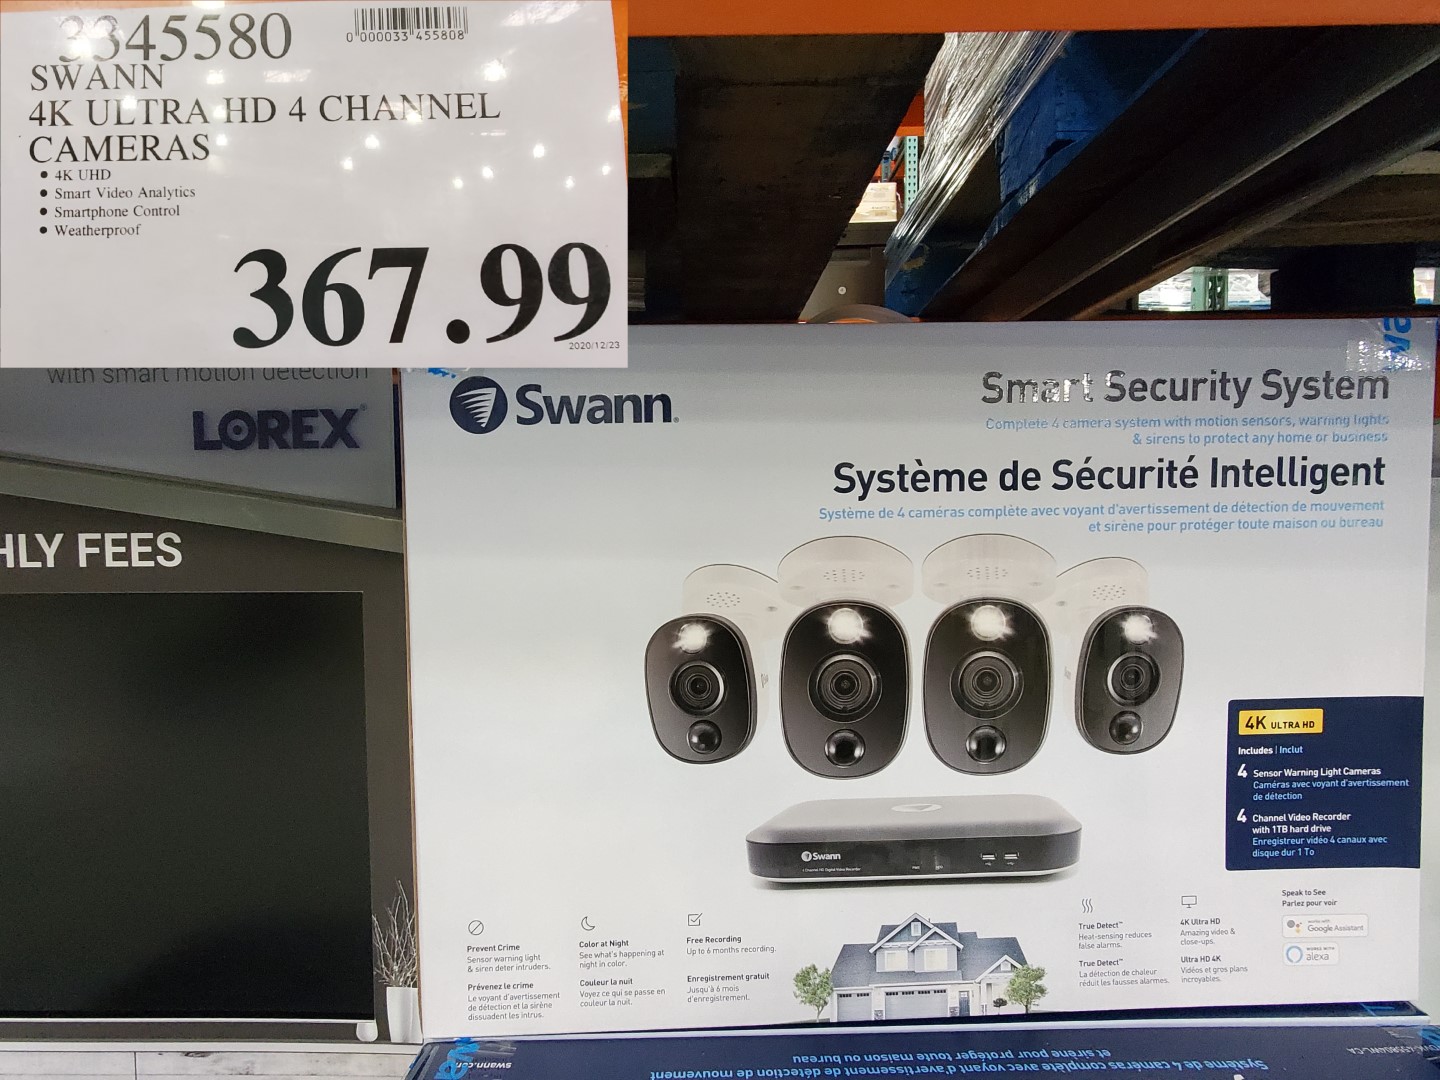 swann security system